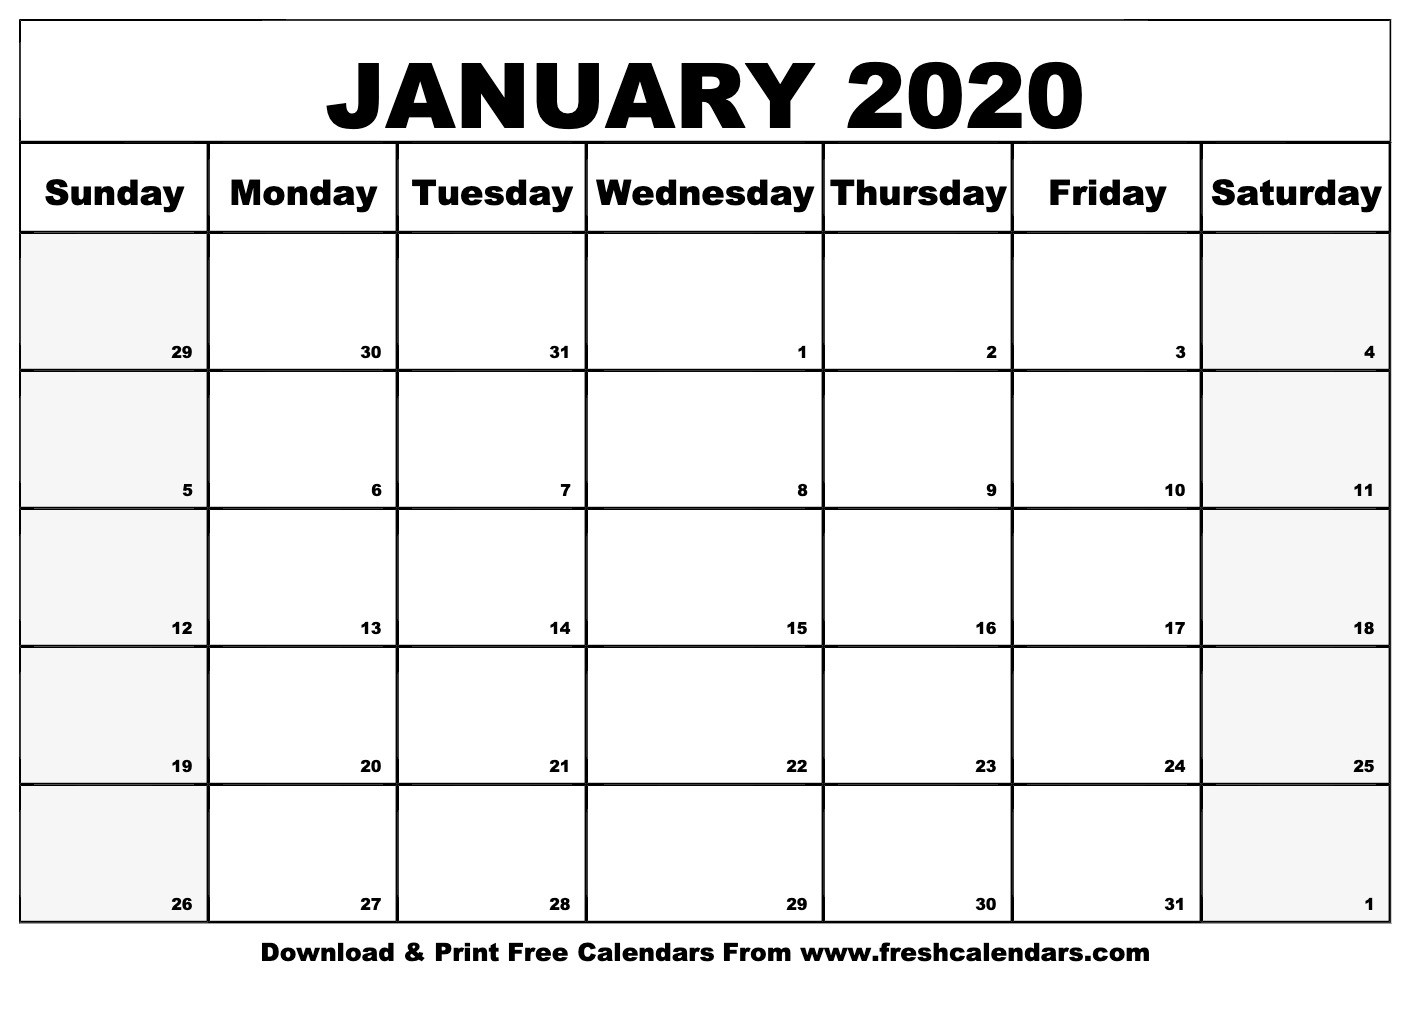 January 2020 Calendar Printable - Fresh Calendars-January 2020 Calendar Microsoft Word